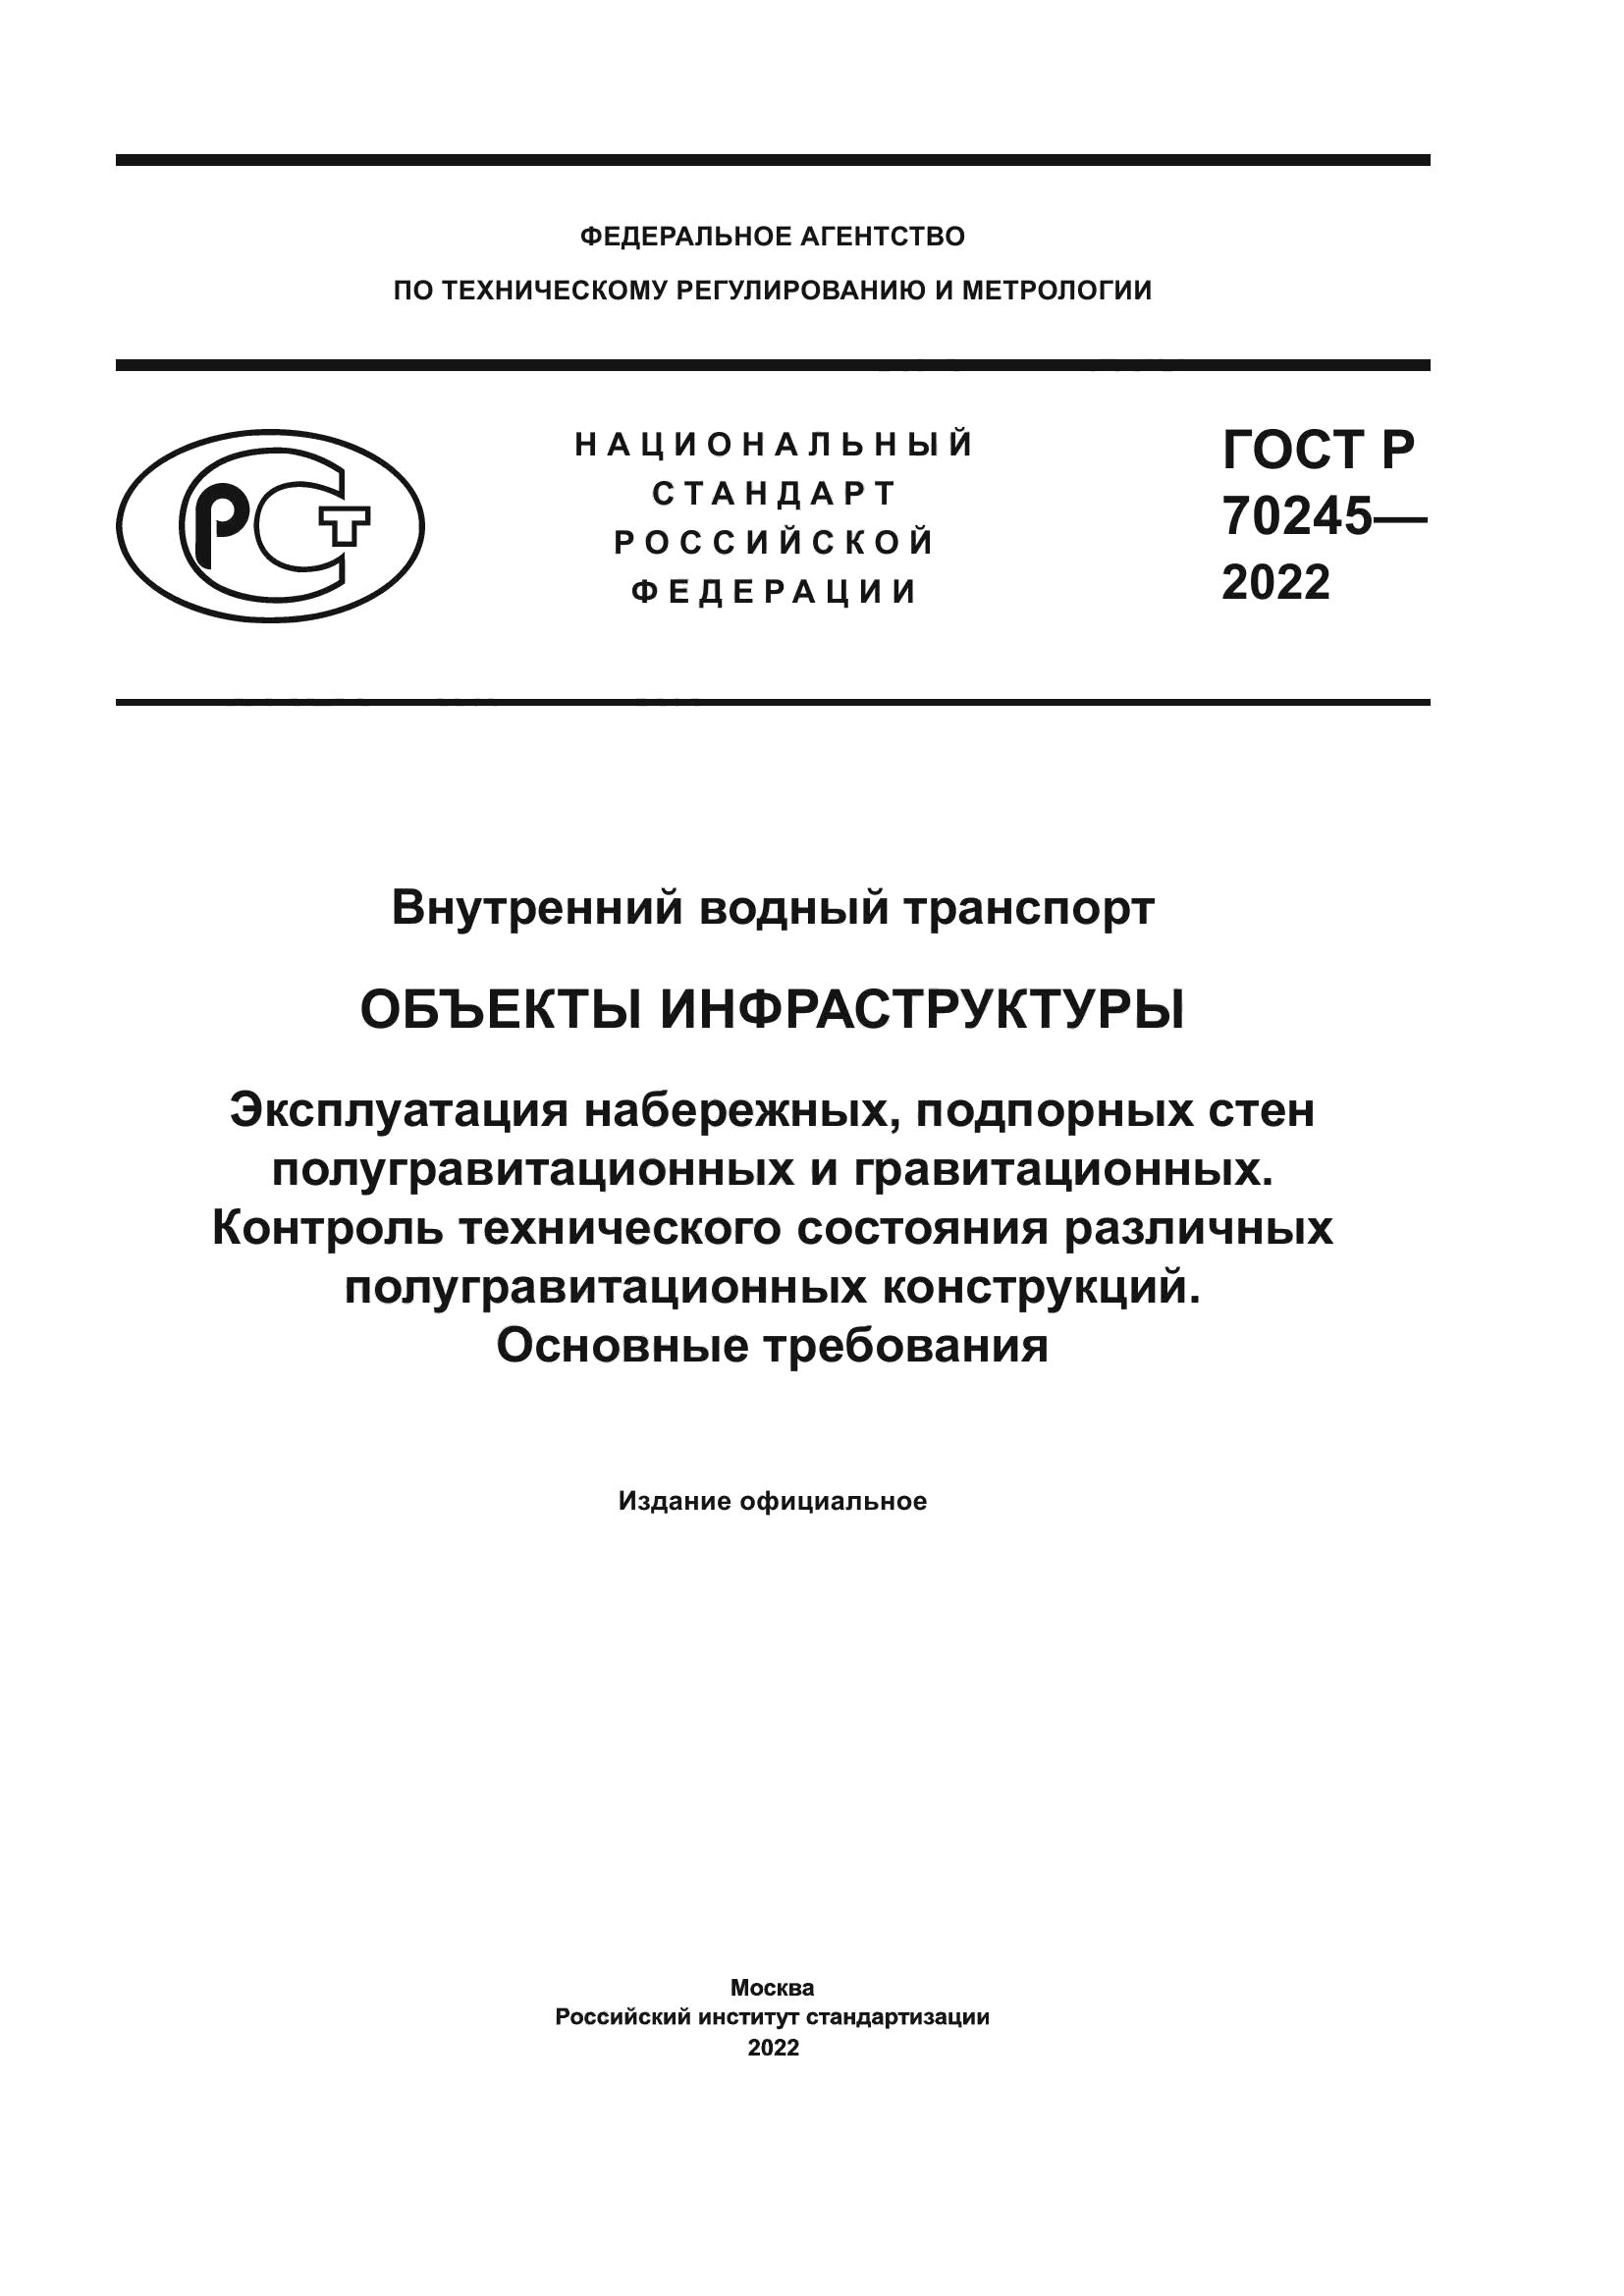 ГОСТ Р 70245-2022